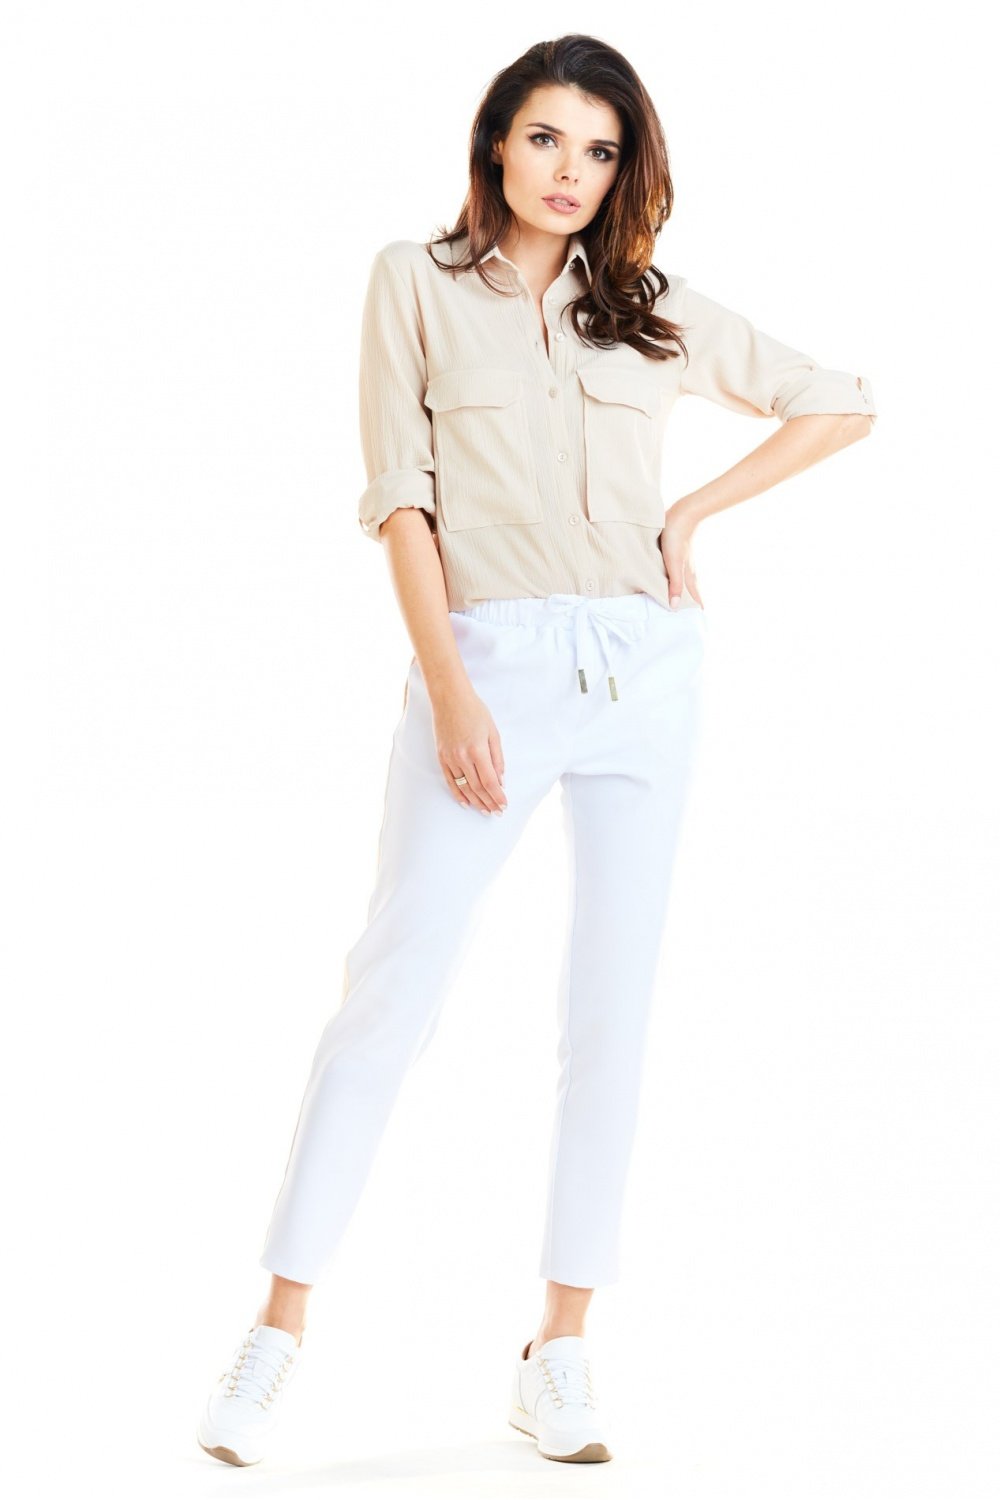 Women trousers model 140006 awama Posh Styles Apparel